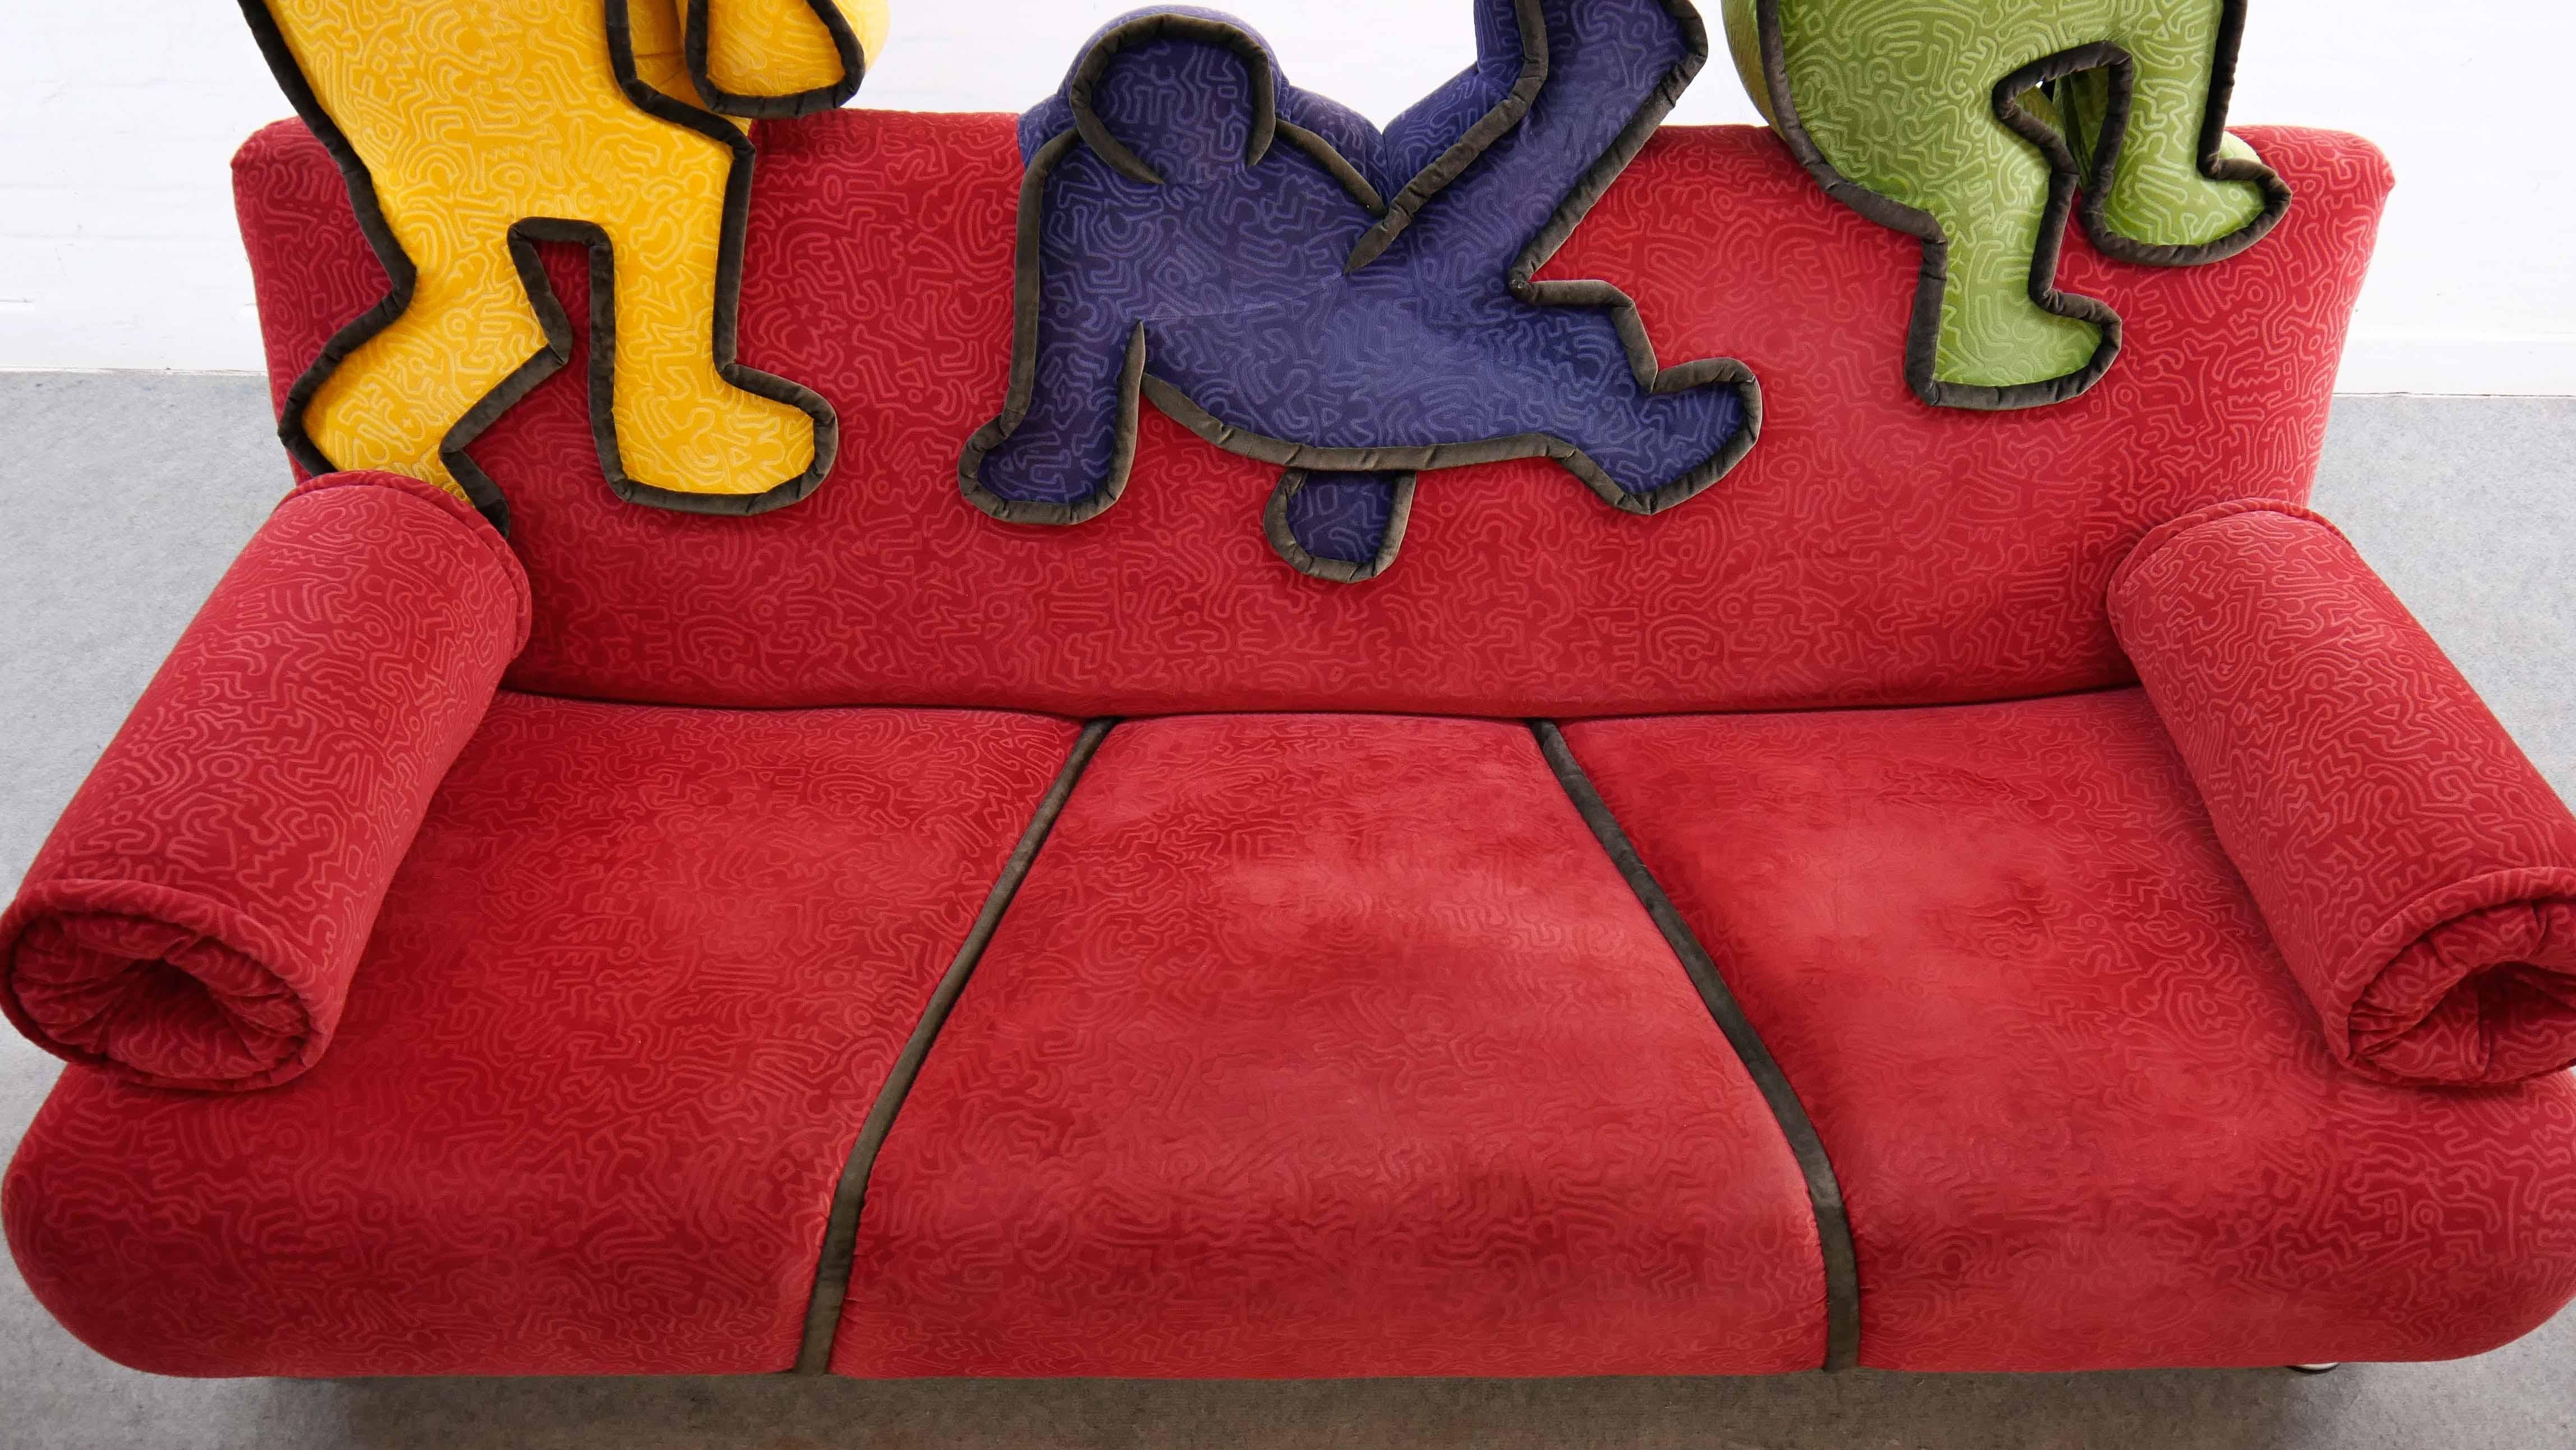 Keith Haring Sofa by Bretz 2002 Pop Art 4